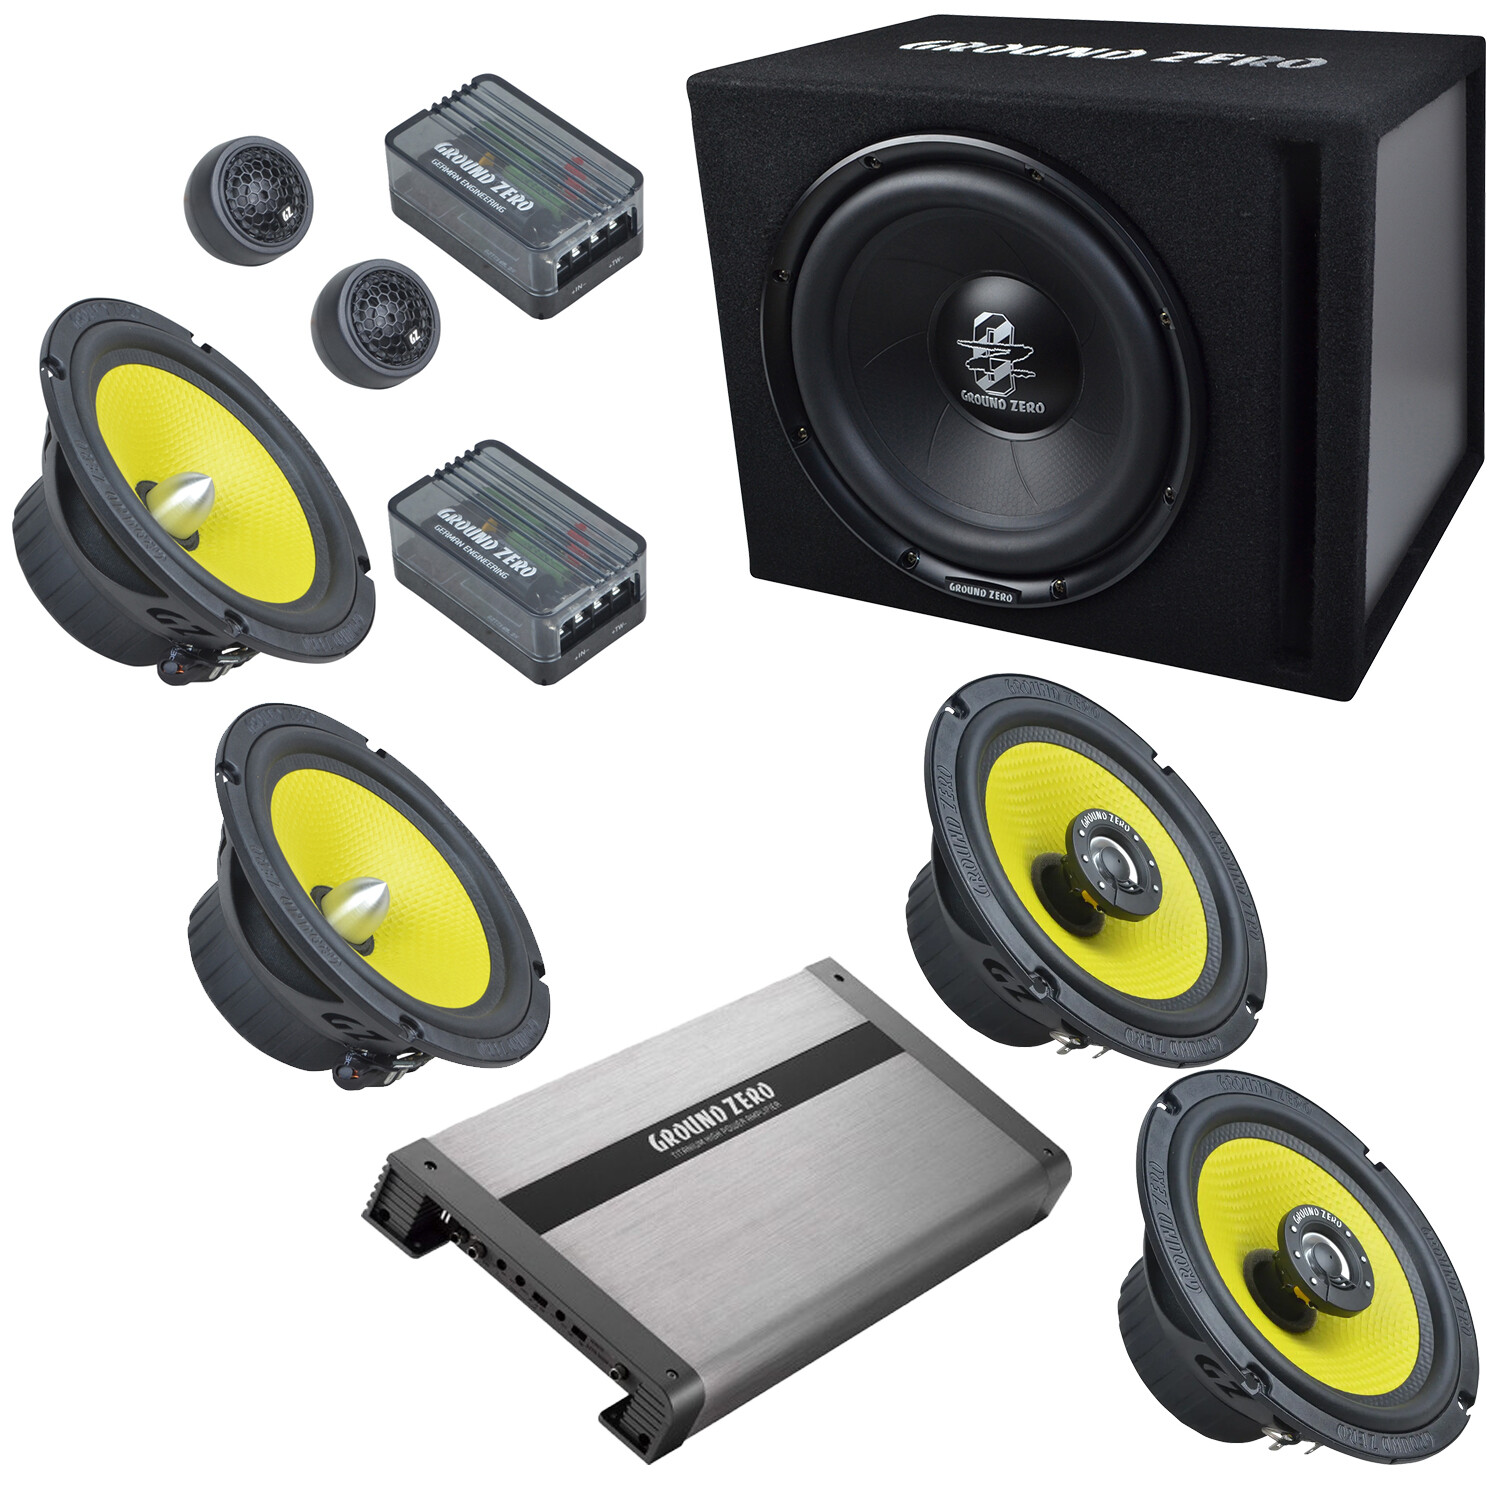 GZ Audiopack entry includes Ground Zero GZTC 165.2X speaker set, GZTF 6.5X coaxial speakers, GZIB 30